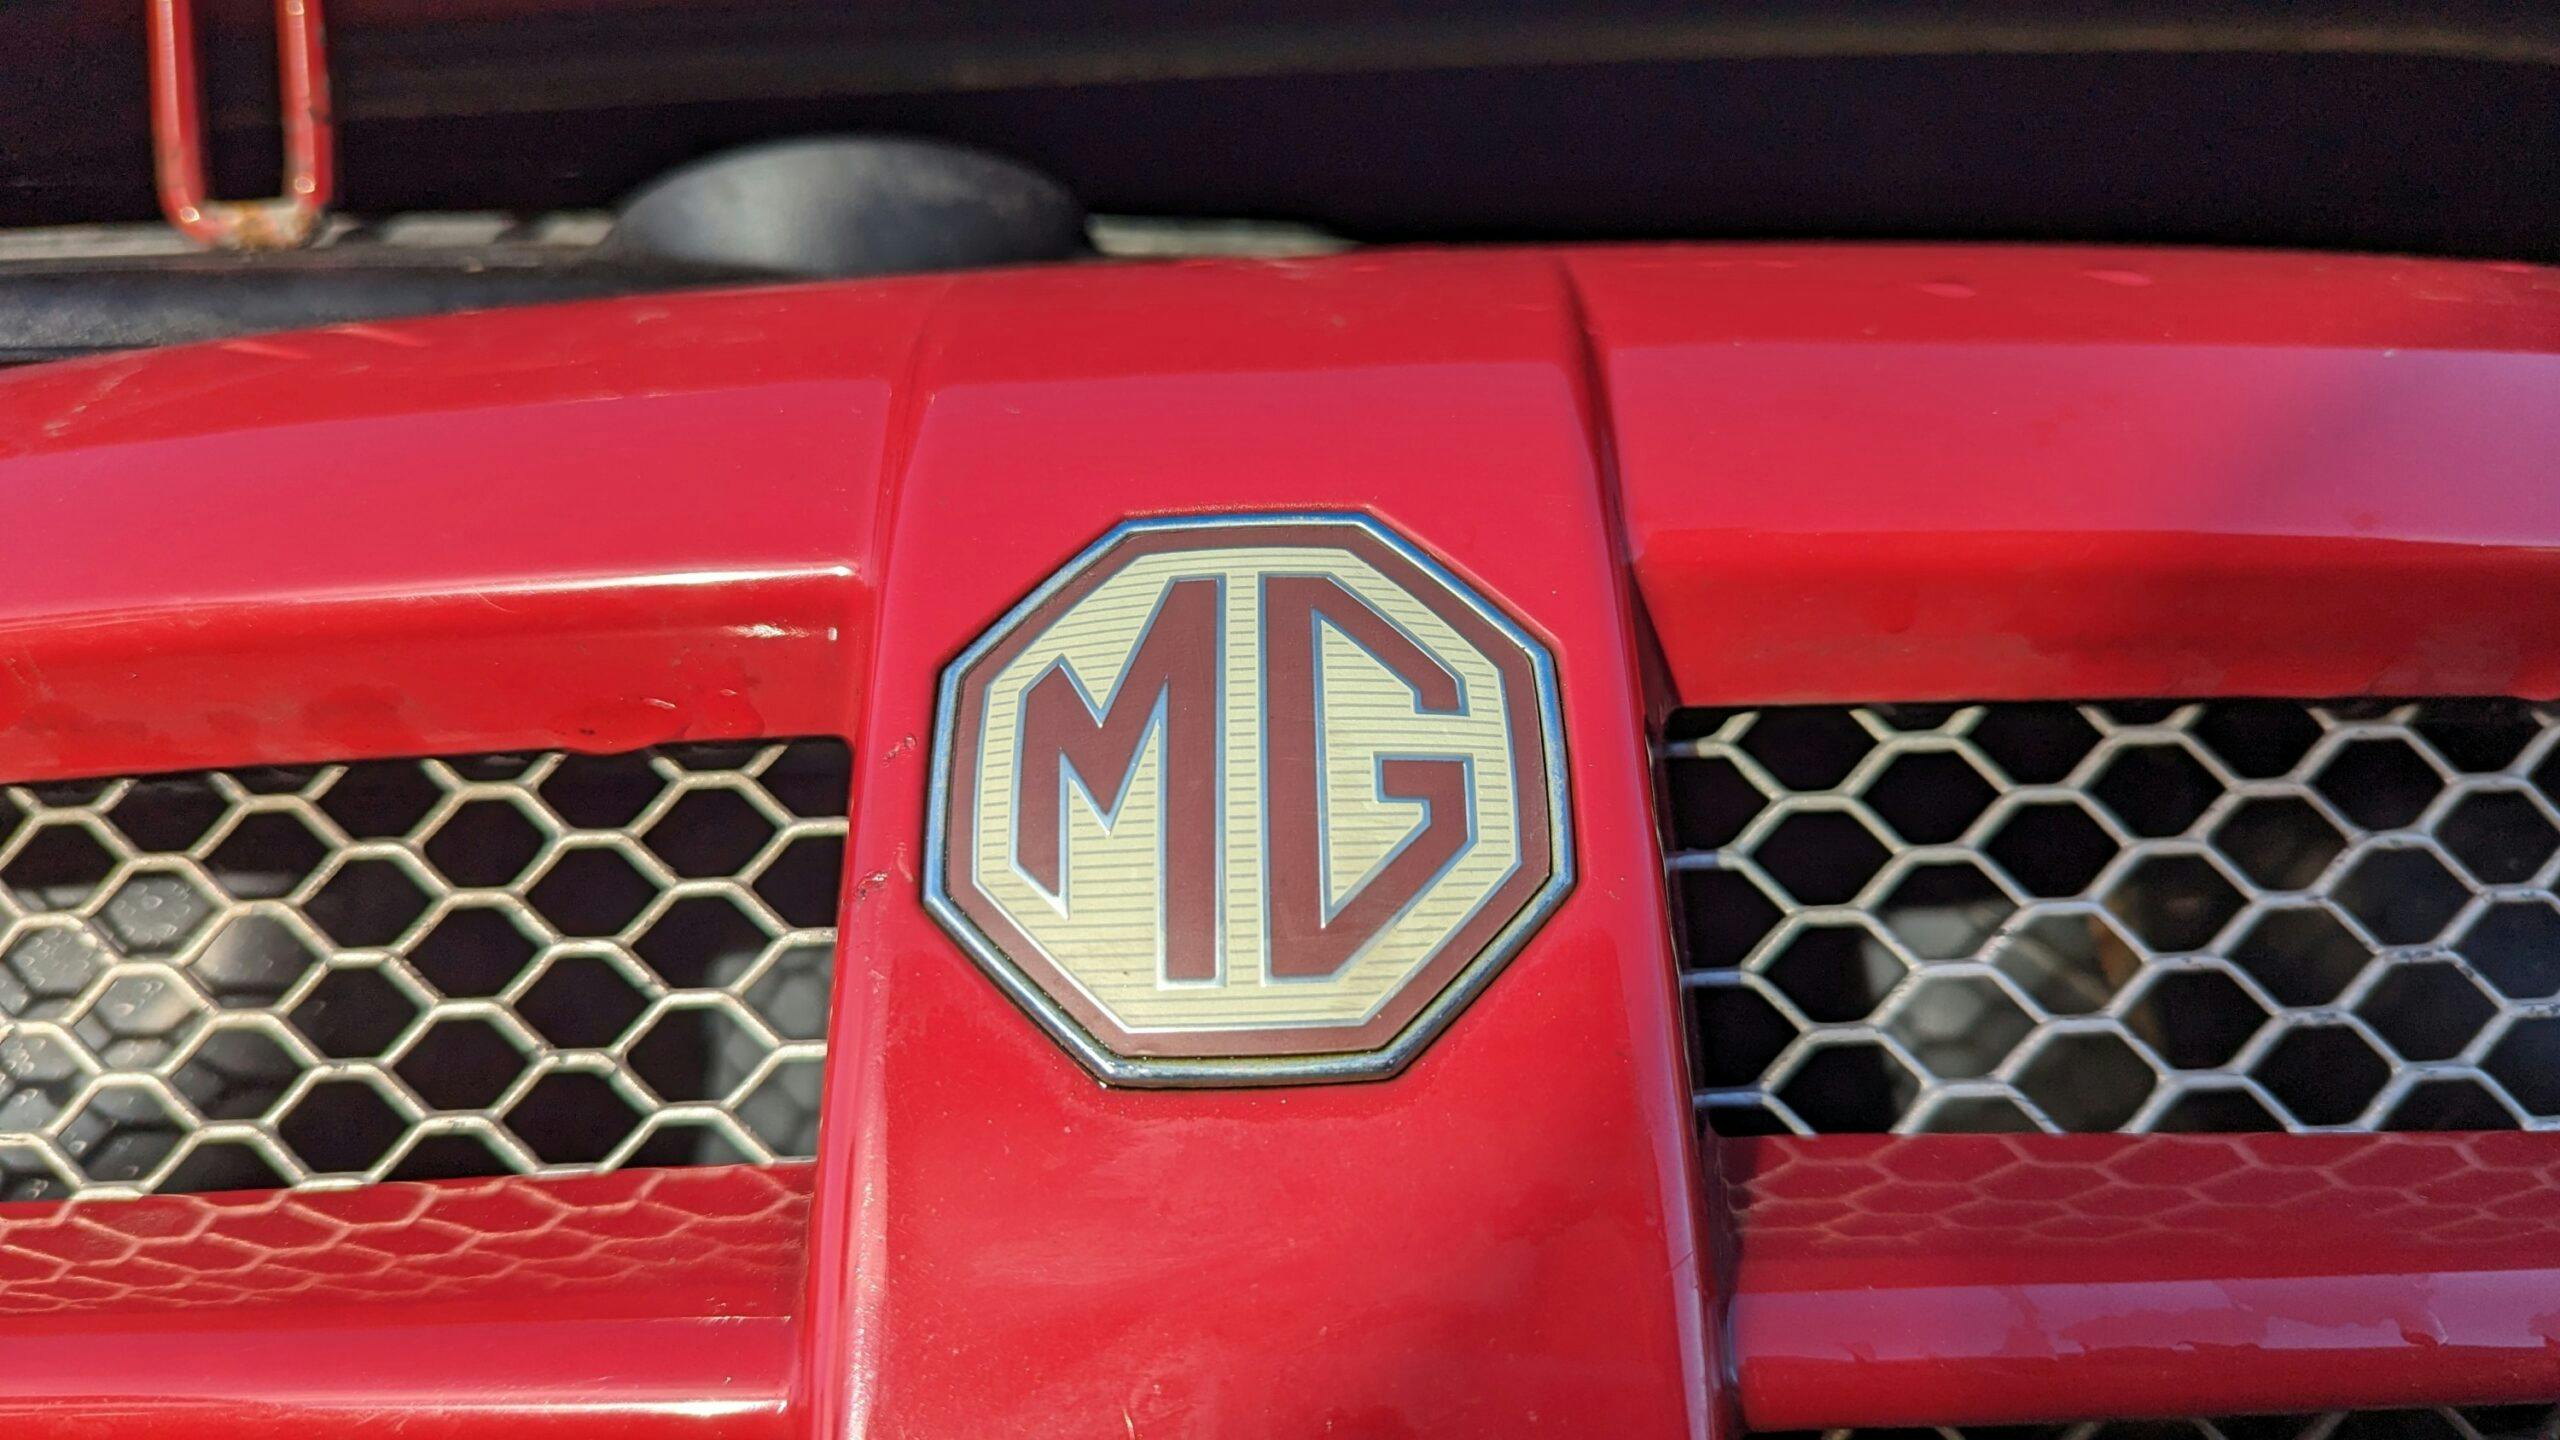 2005 MG ZT 190 badge